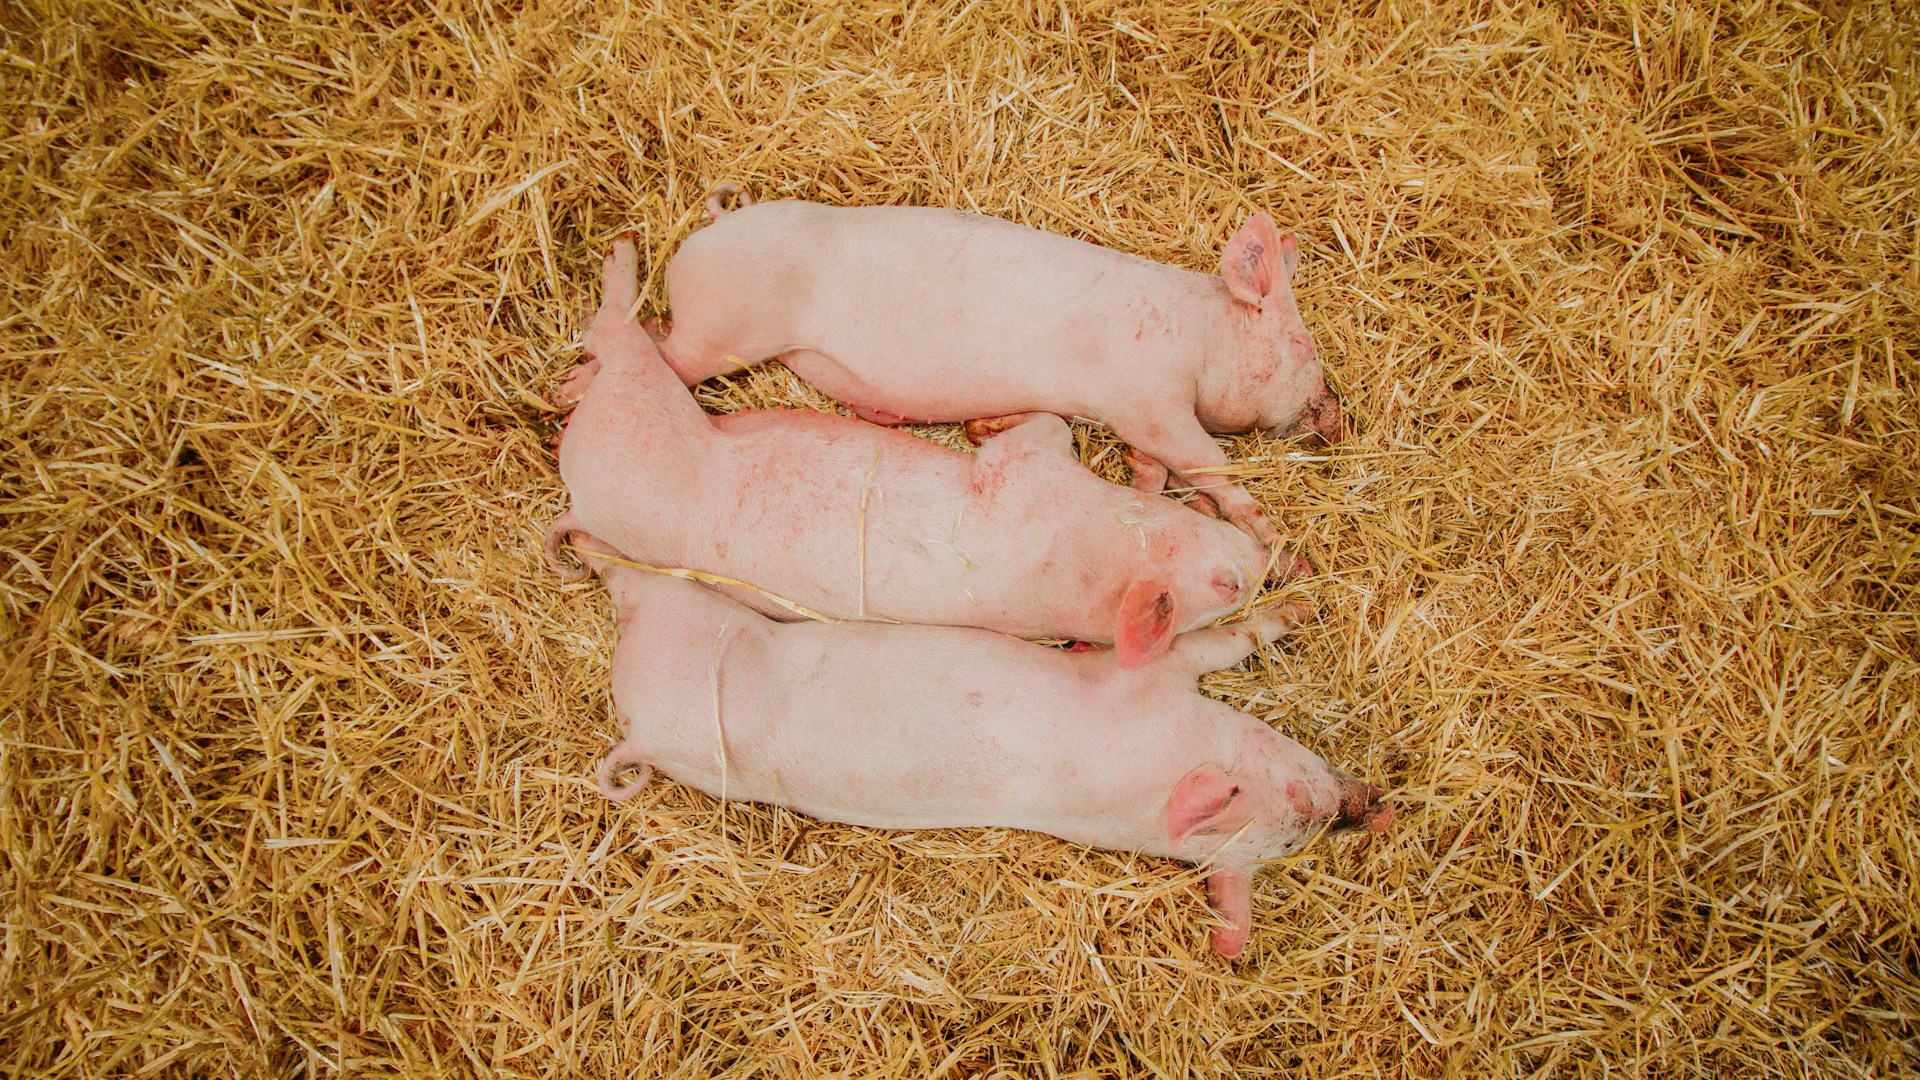 dongeng 3 babi kecil